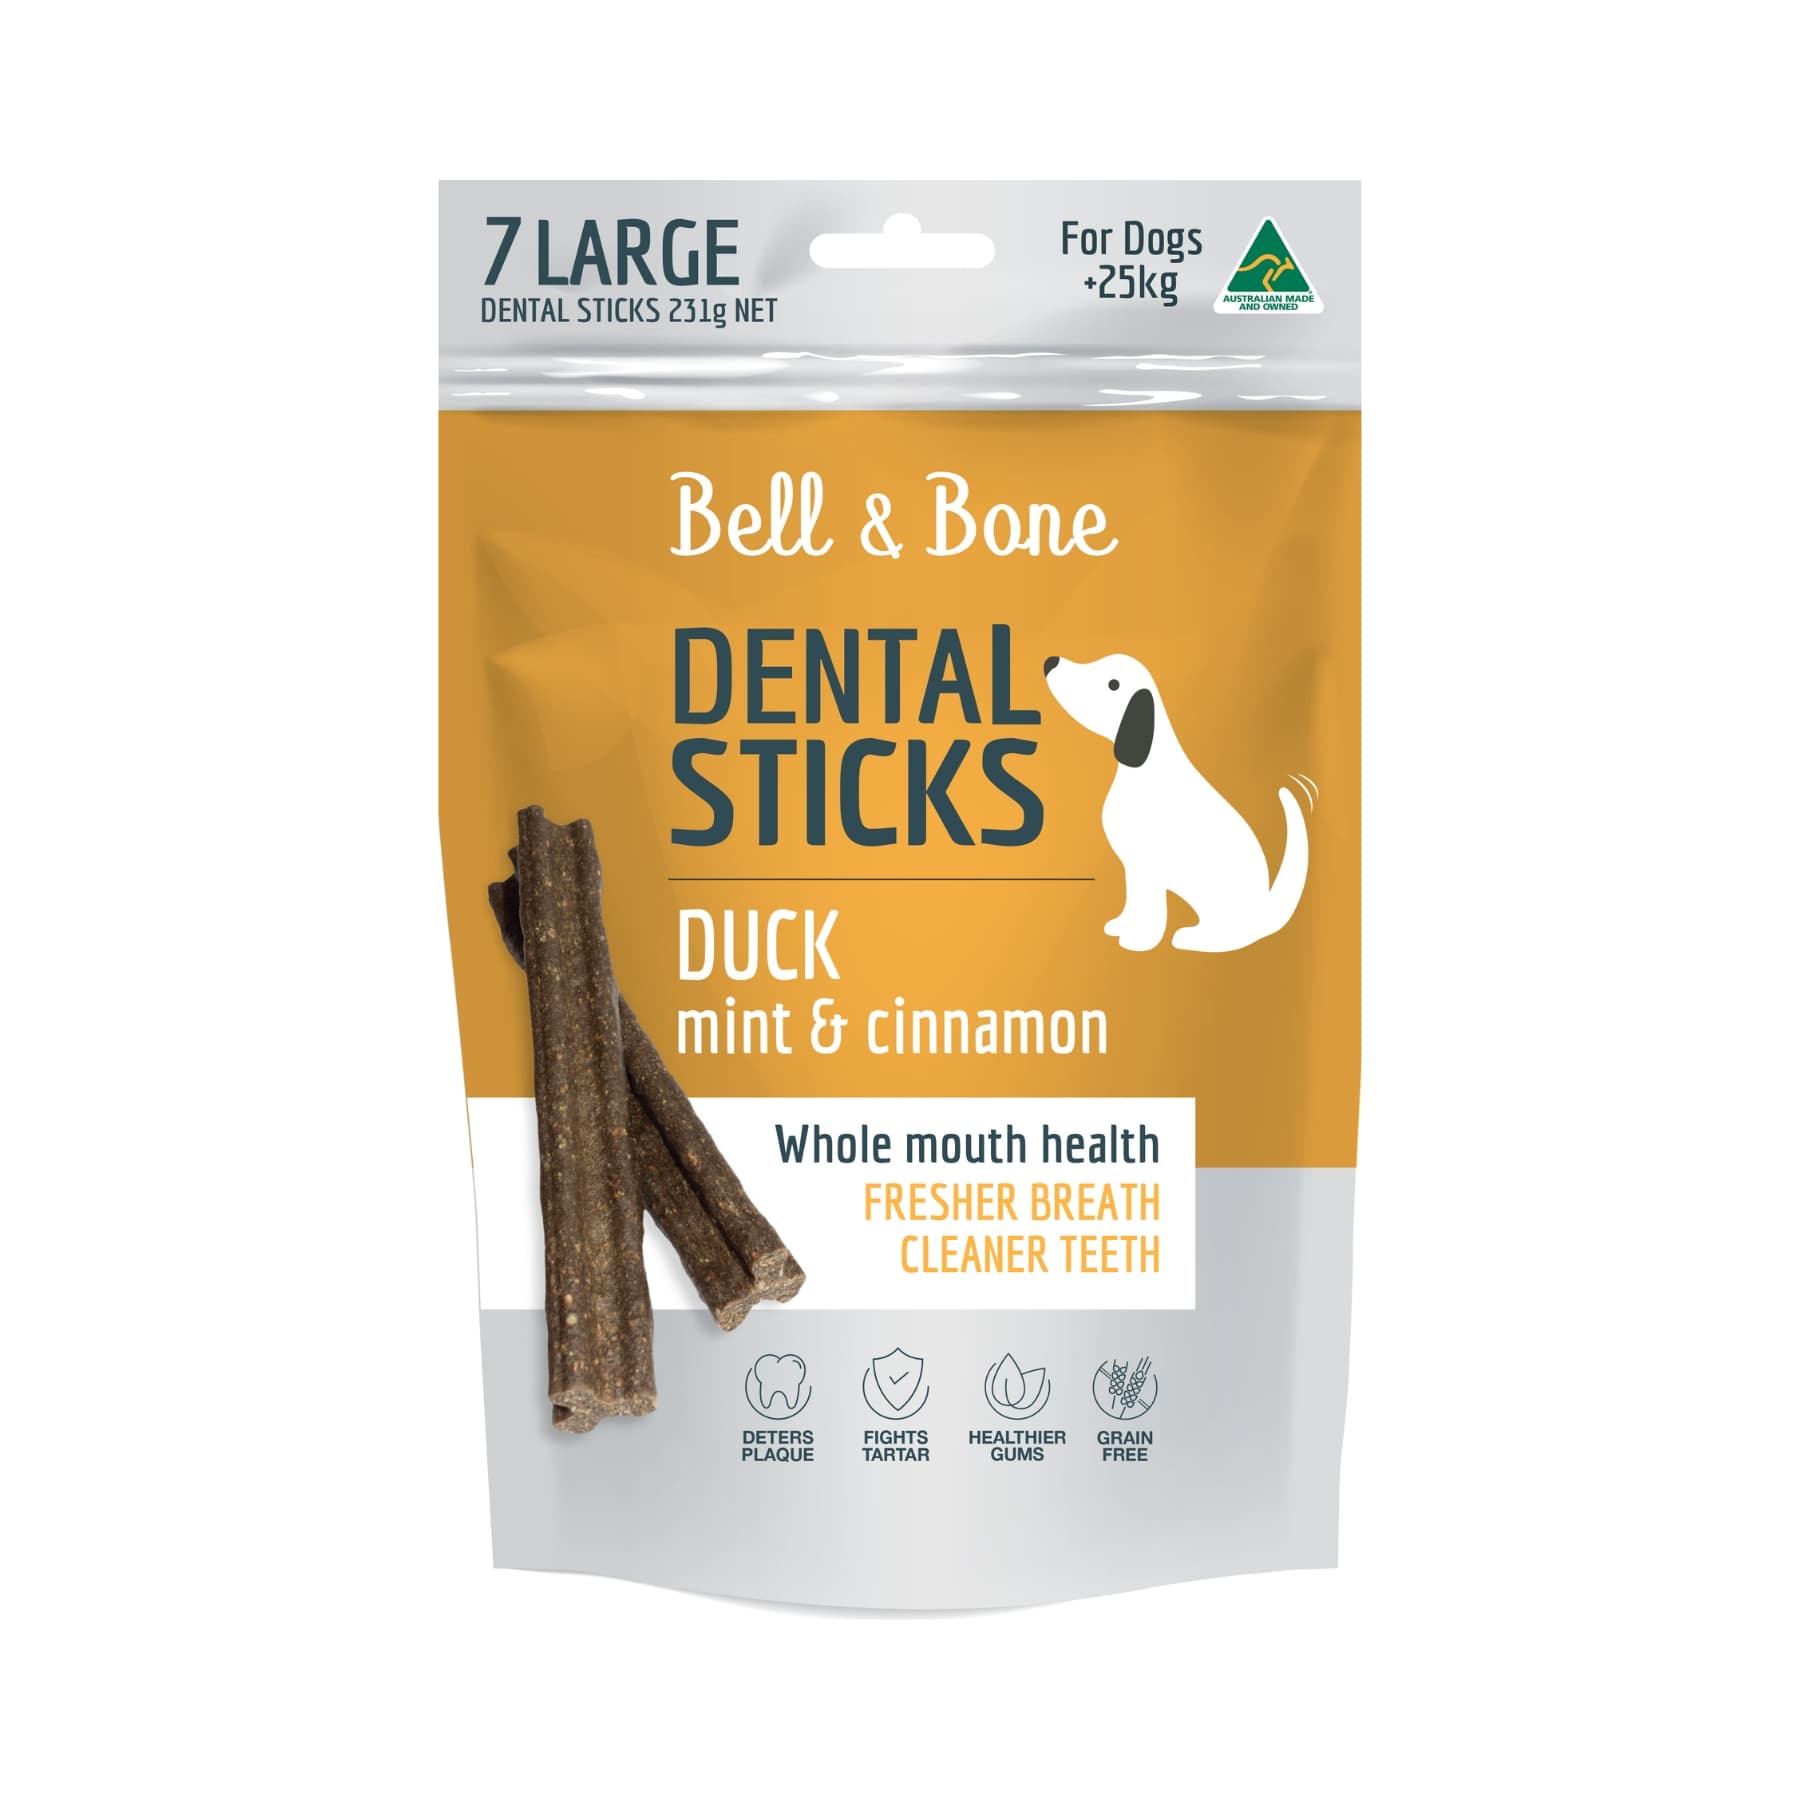 Bell & Bone Dental Sticks Duck, Mint & Cinnamon - Large. Australian Made Dental Treats for Dogs.